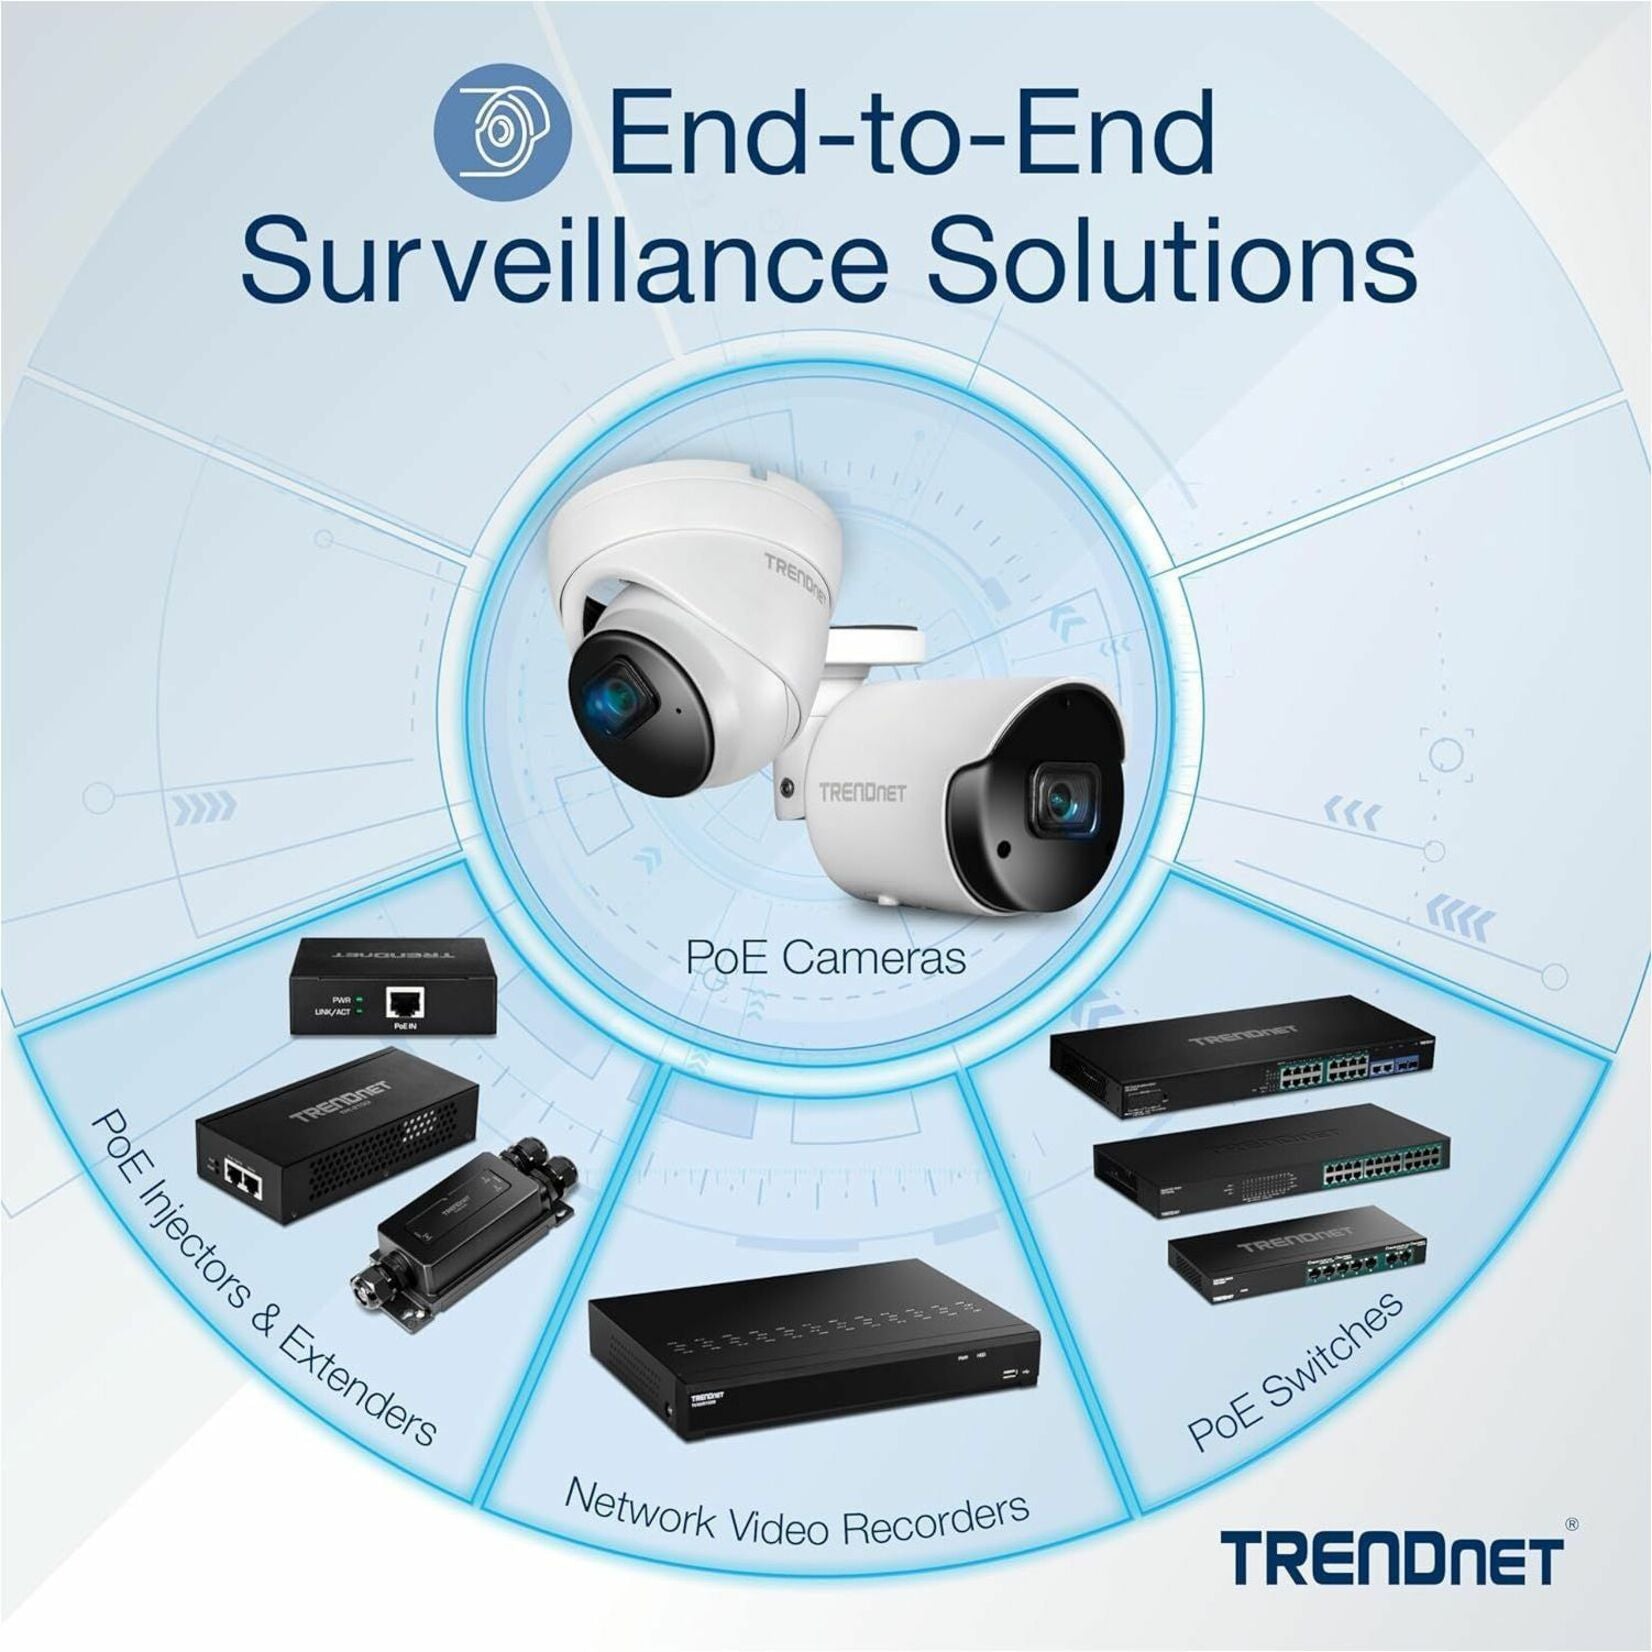 TRENDnet TPE-S44 8-Port 10/100 Mbps PoE Switch, Fast Ethernet, 30W PoE Budget